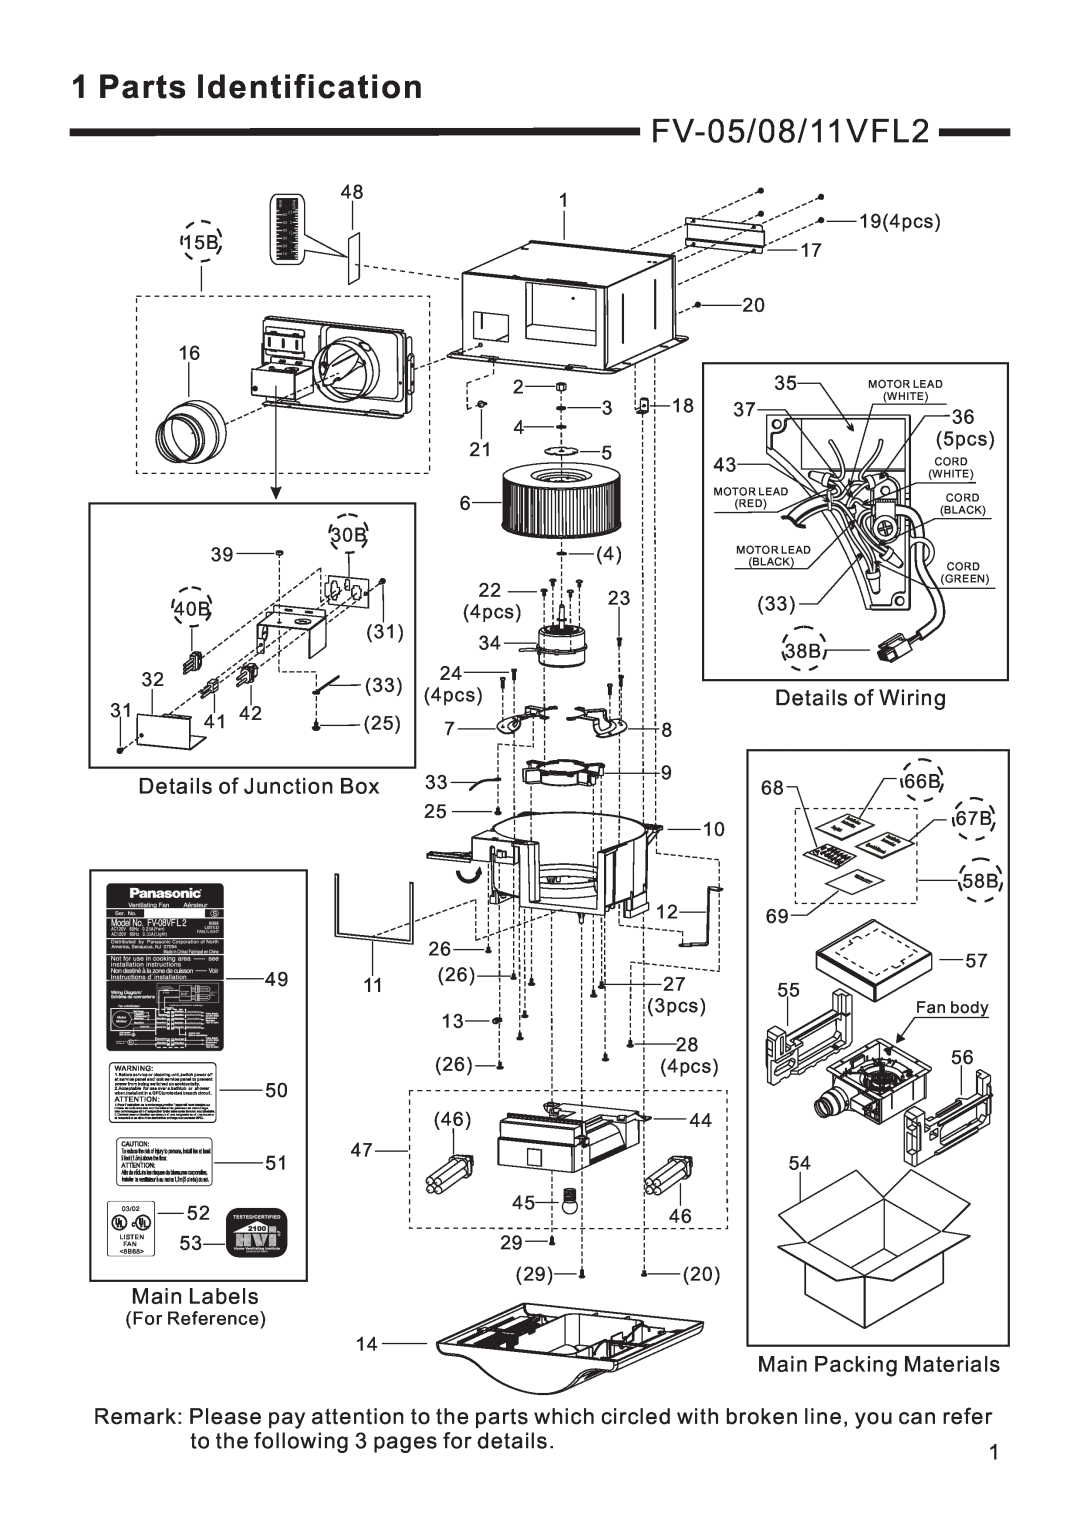 Panasonic FV-05/08/11VFL2 service manual Parts Identification 